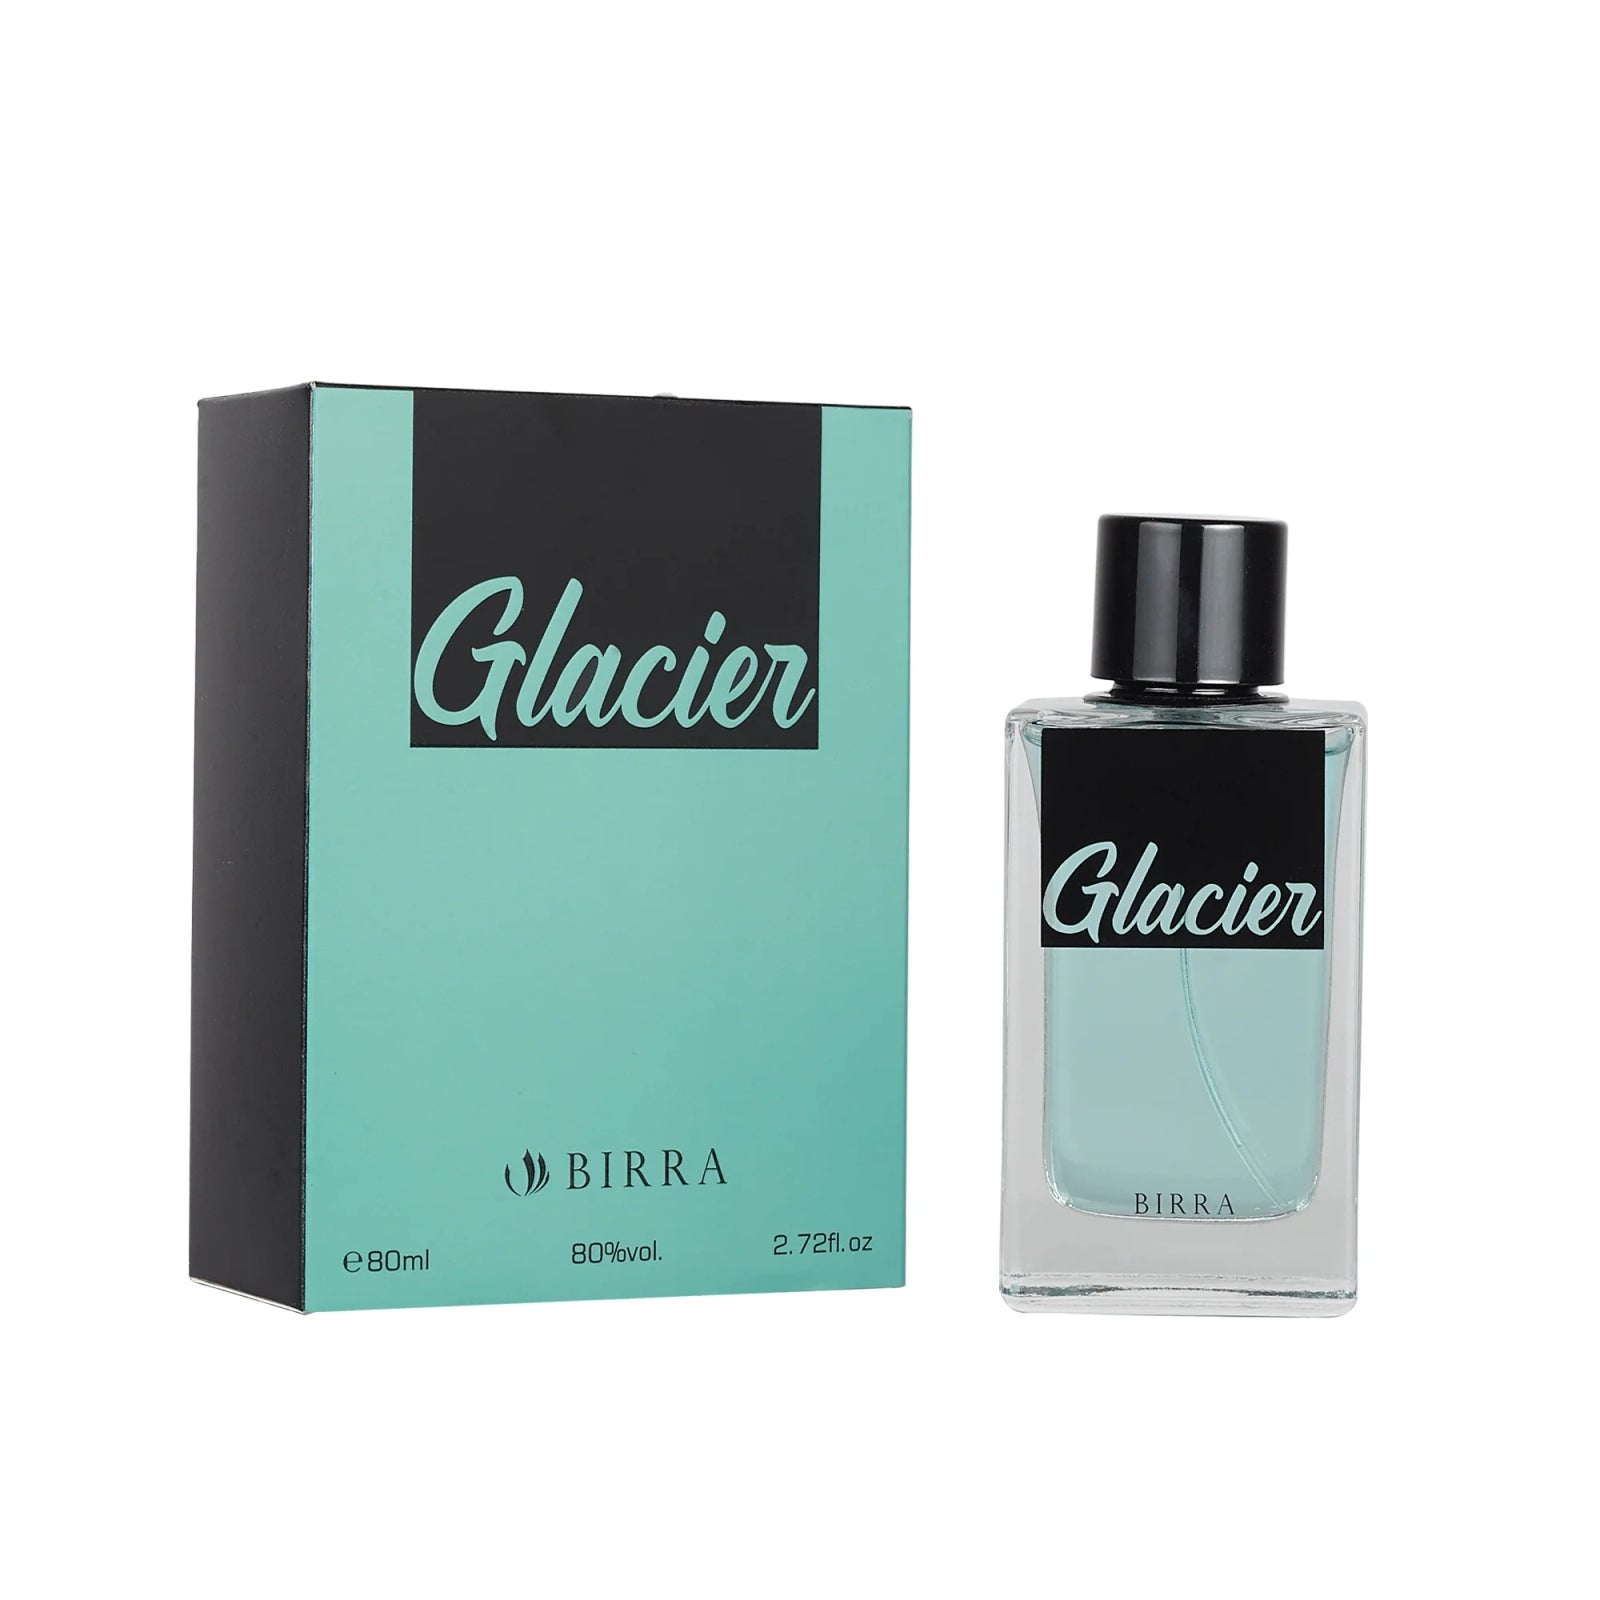 glacier-Premium perfume for men